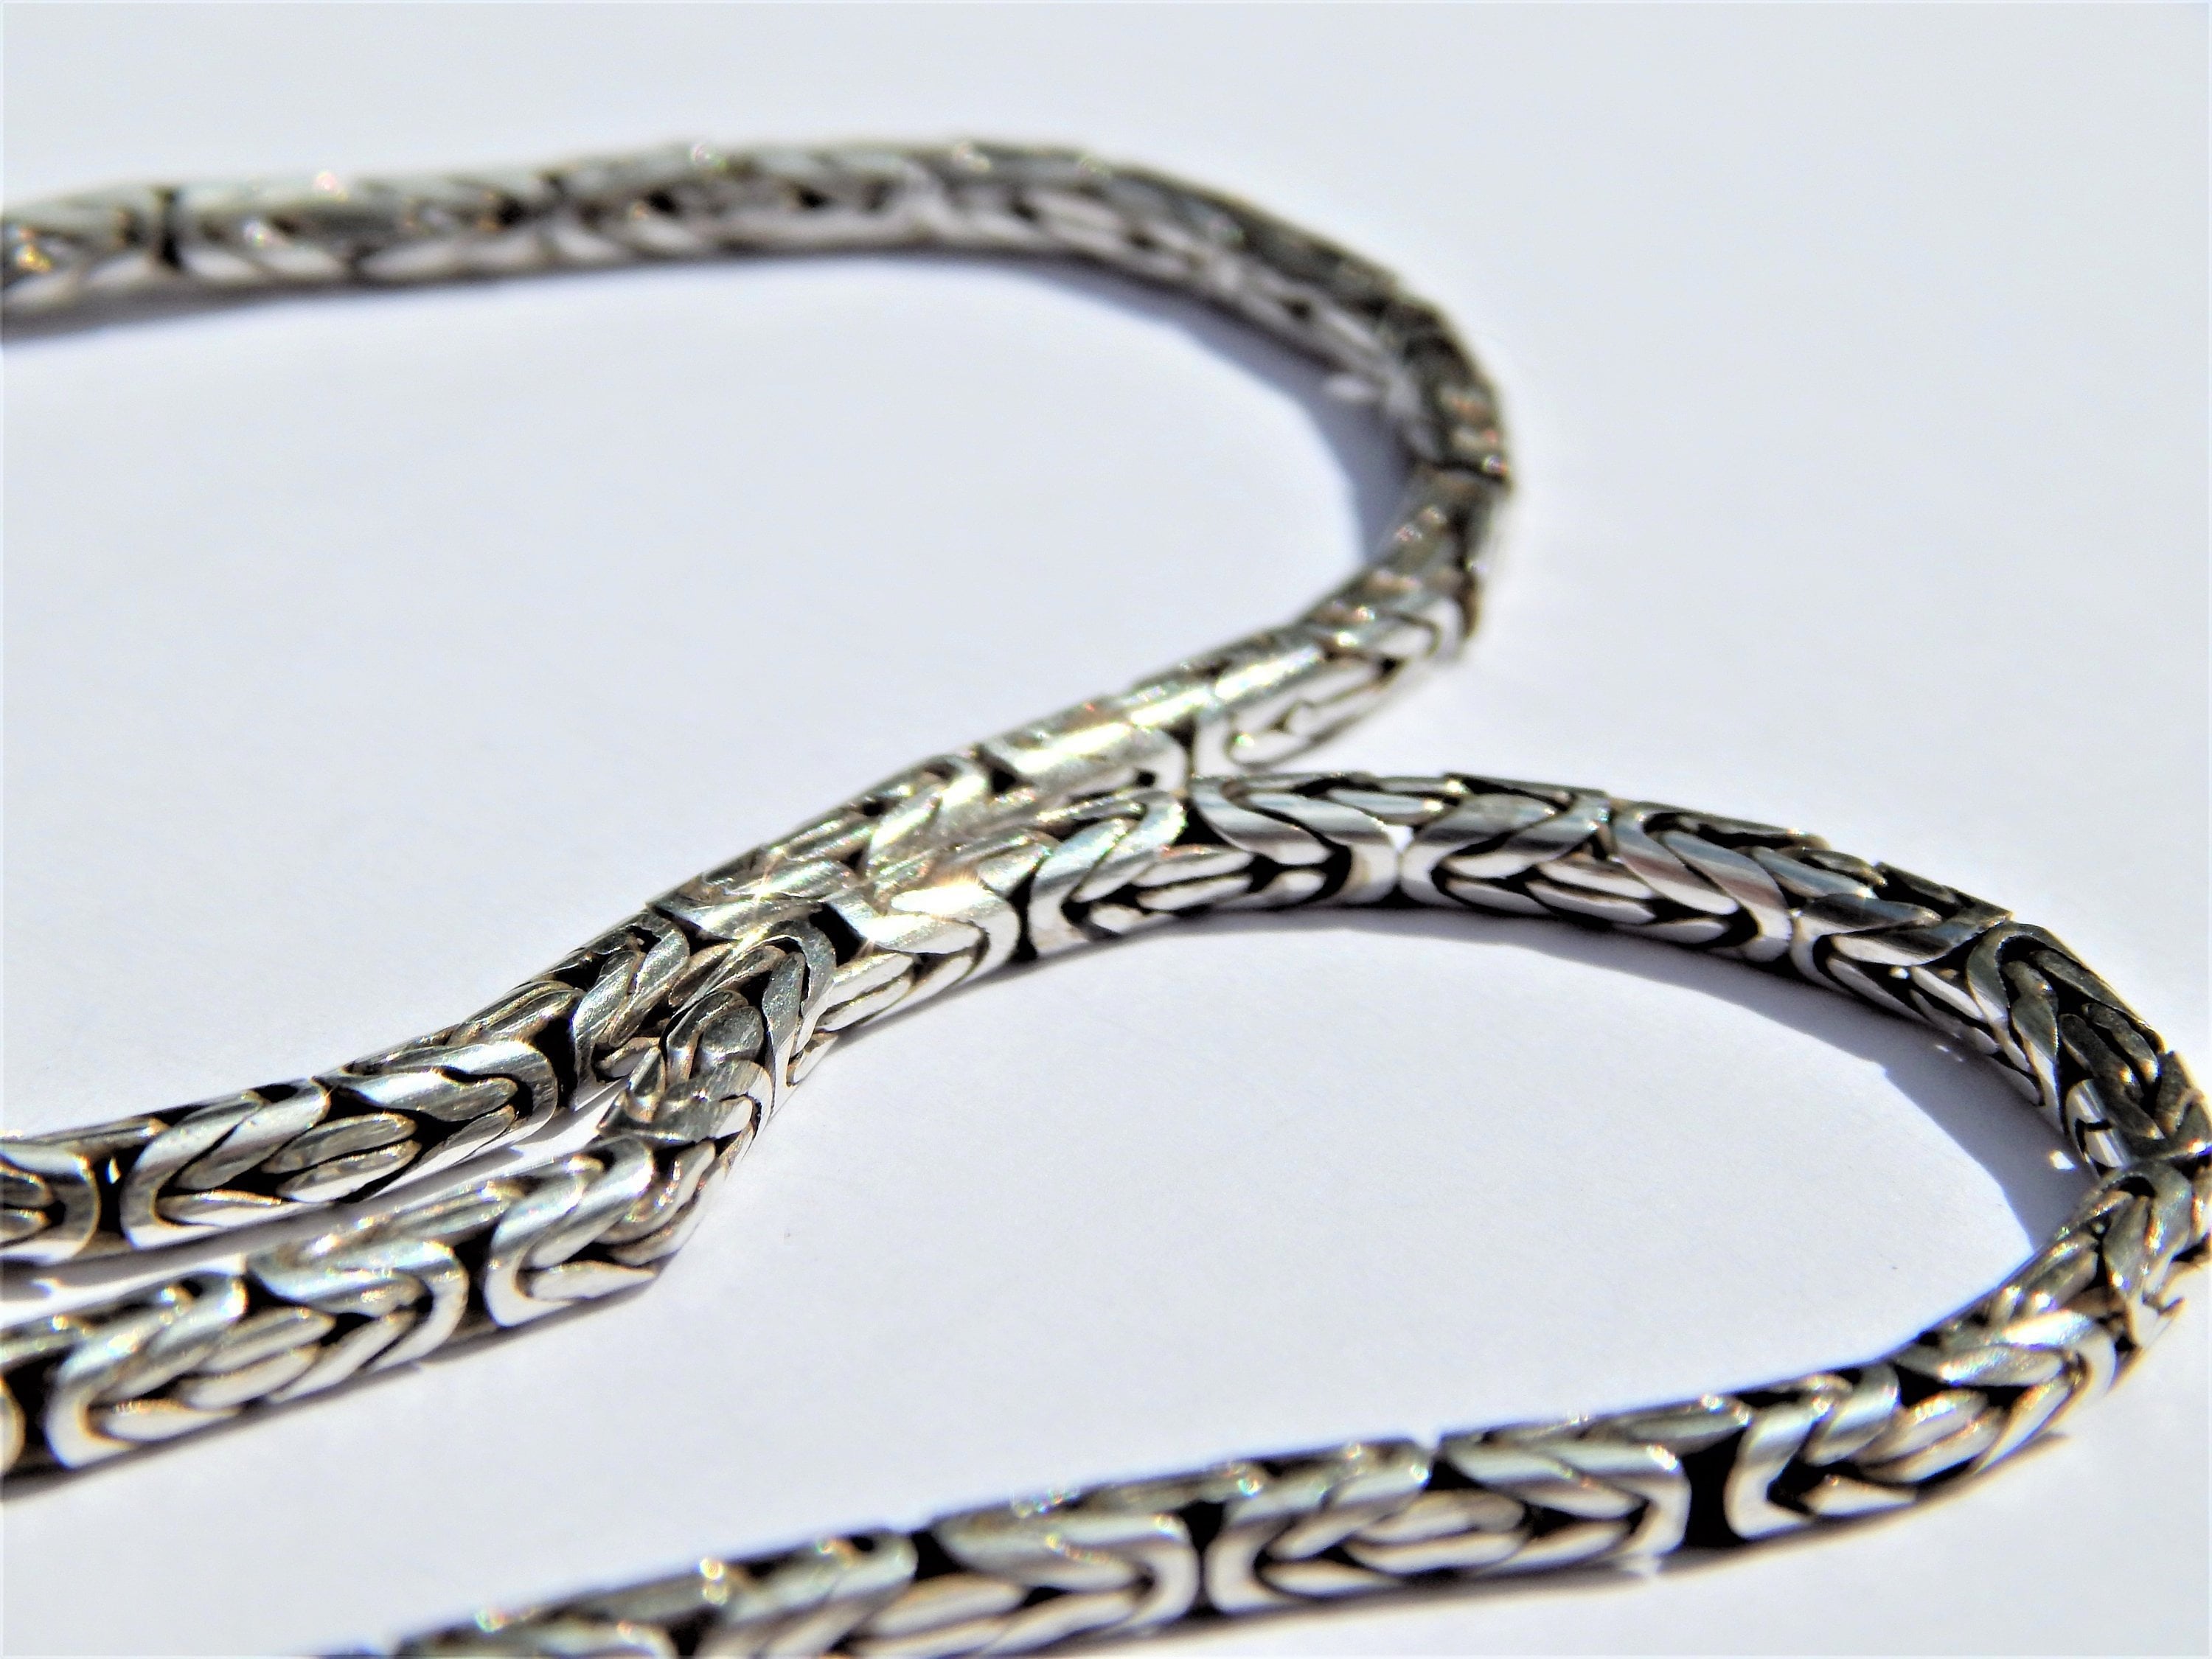 Silver Byzantine Chain Necklace, Shop